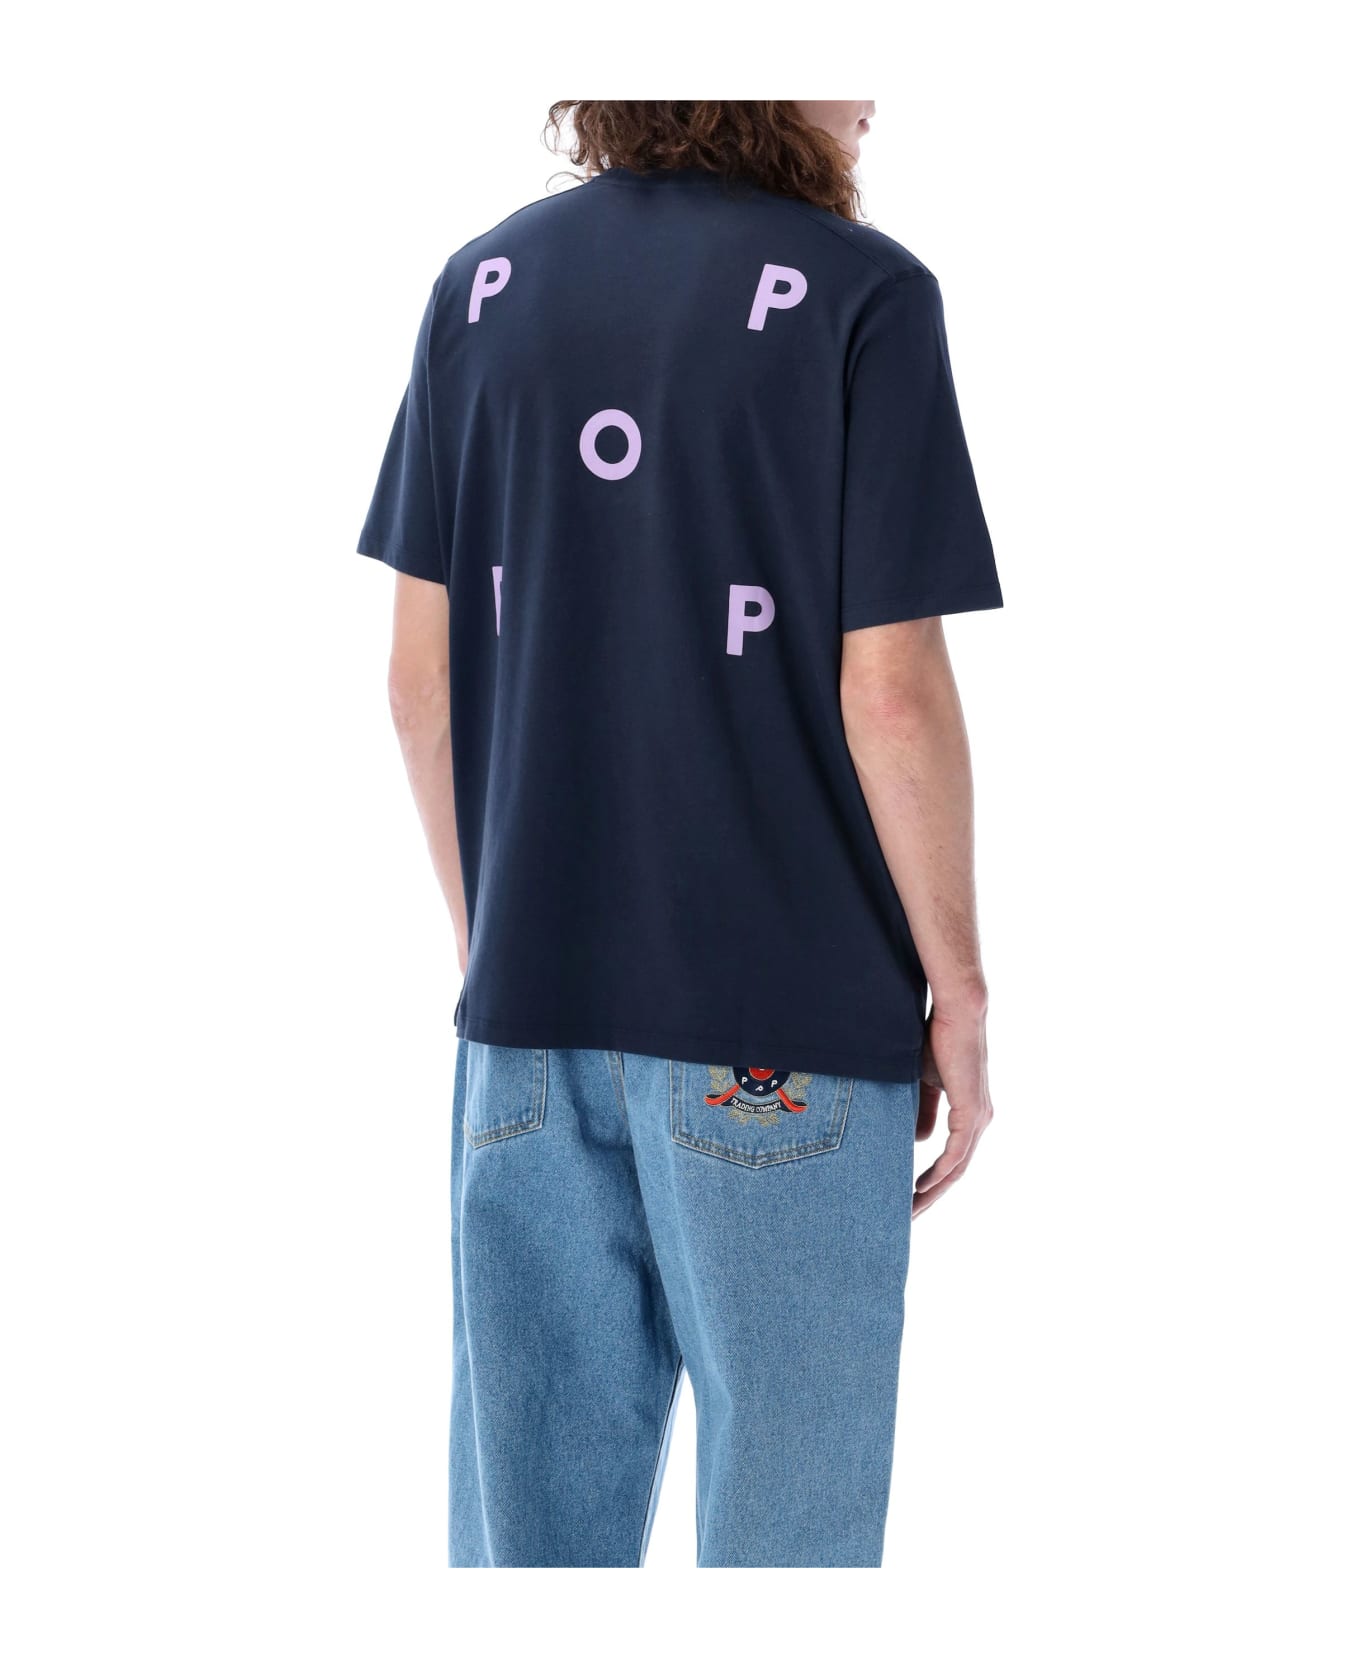 Pop Trading Company Pop Logo T-shirt - NAVY シャツ